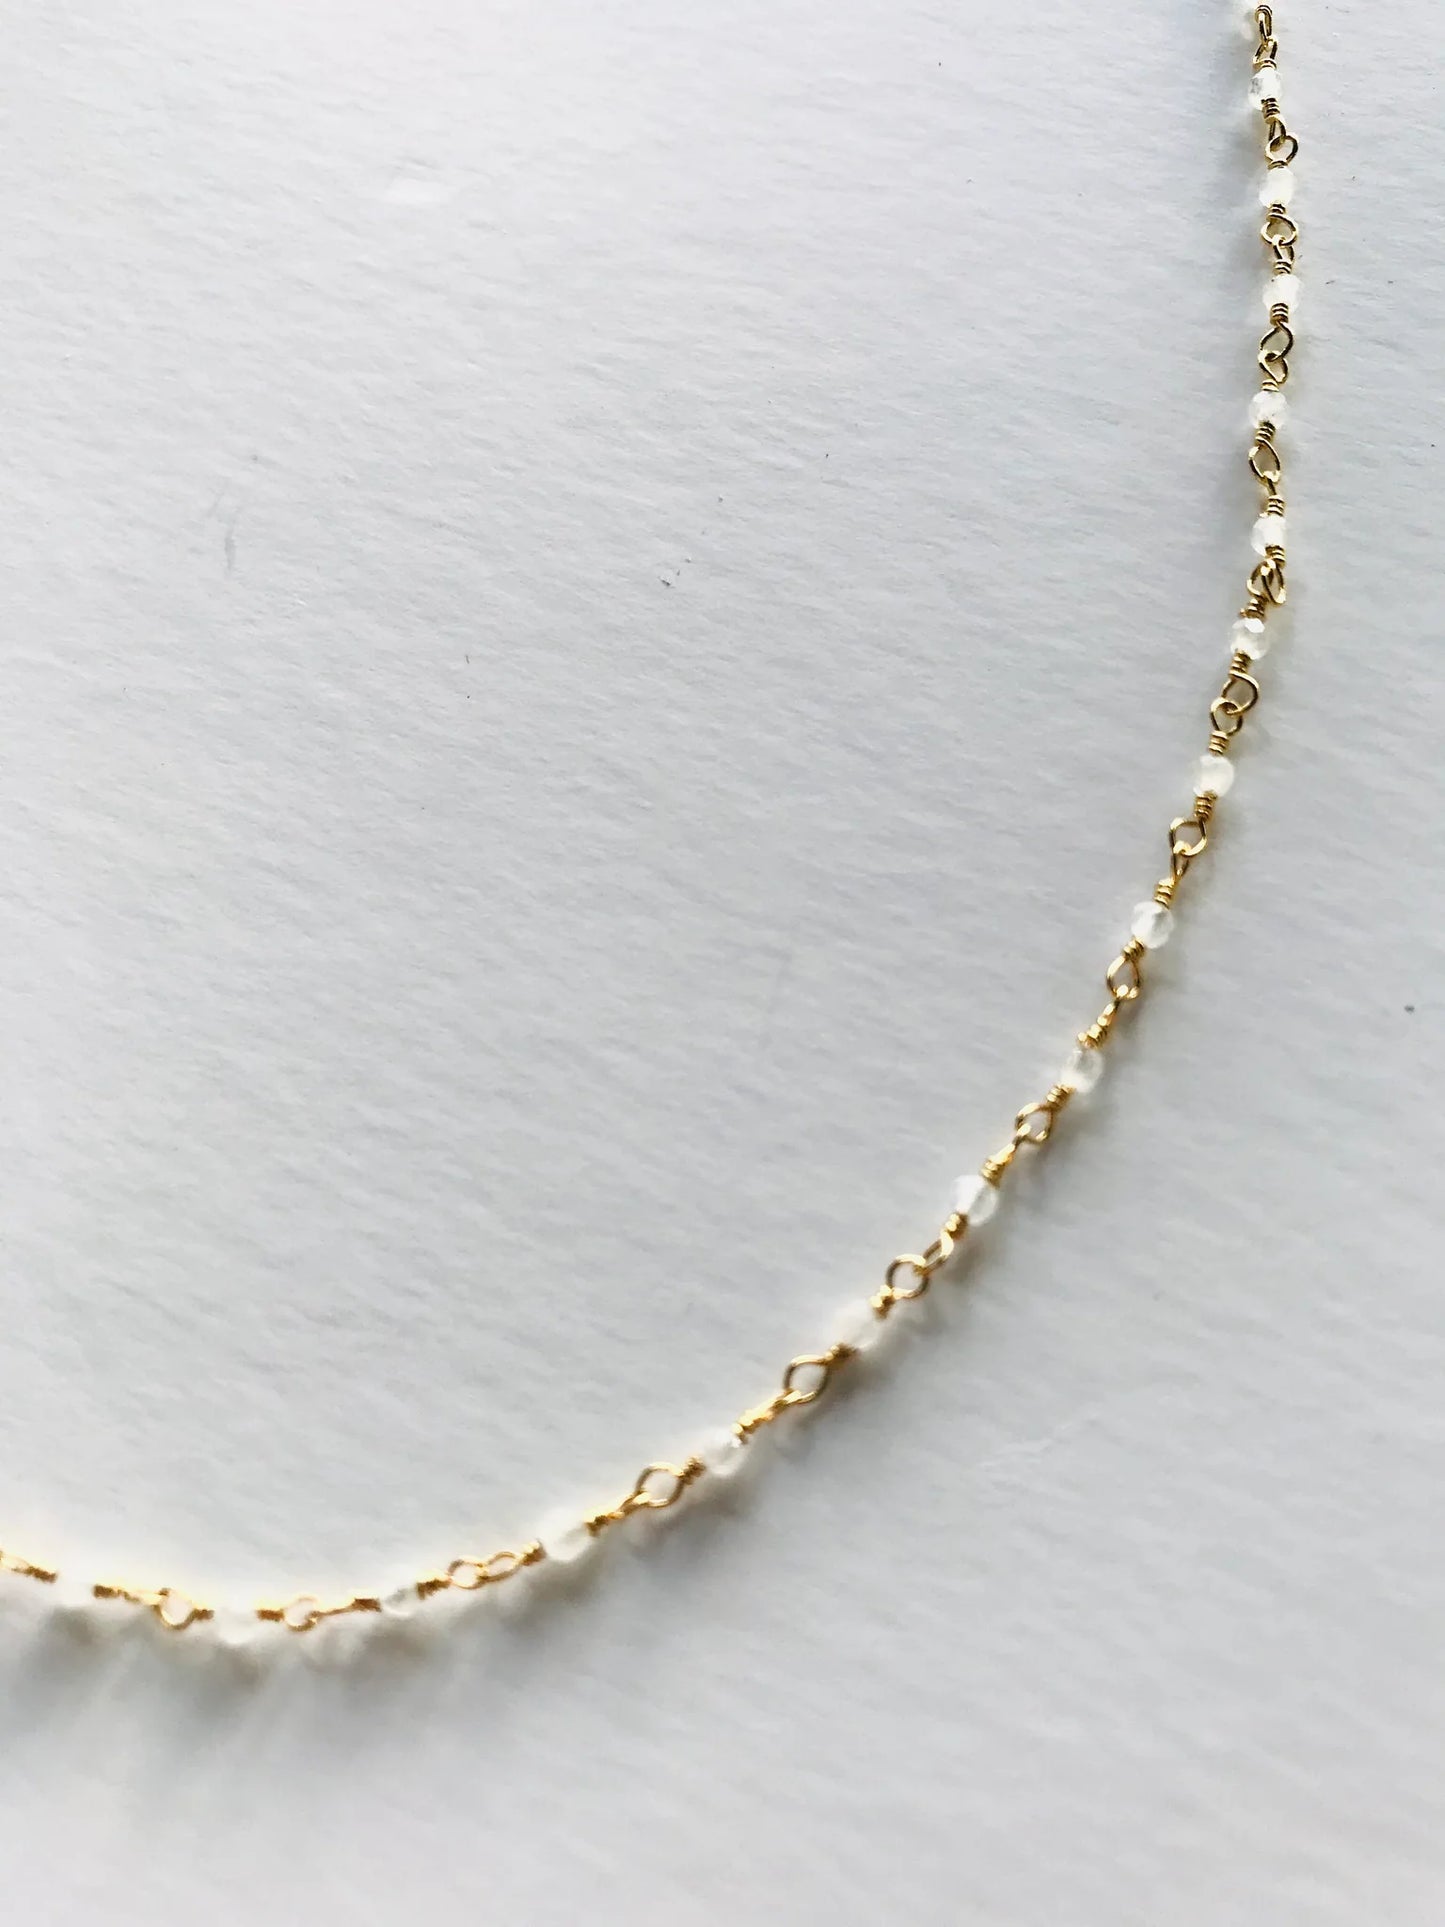 Gemstone Necklaces and Bracelets by Maya Joy in the World